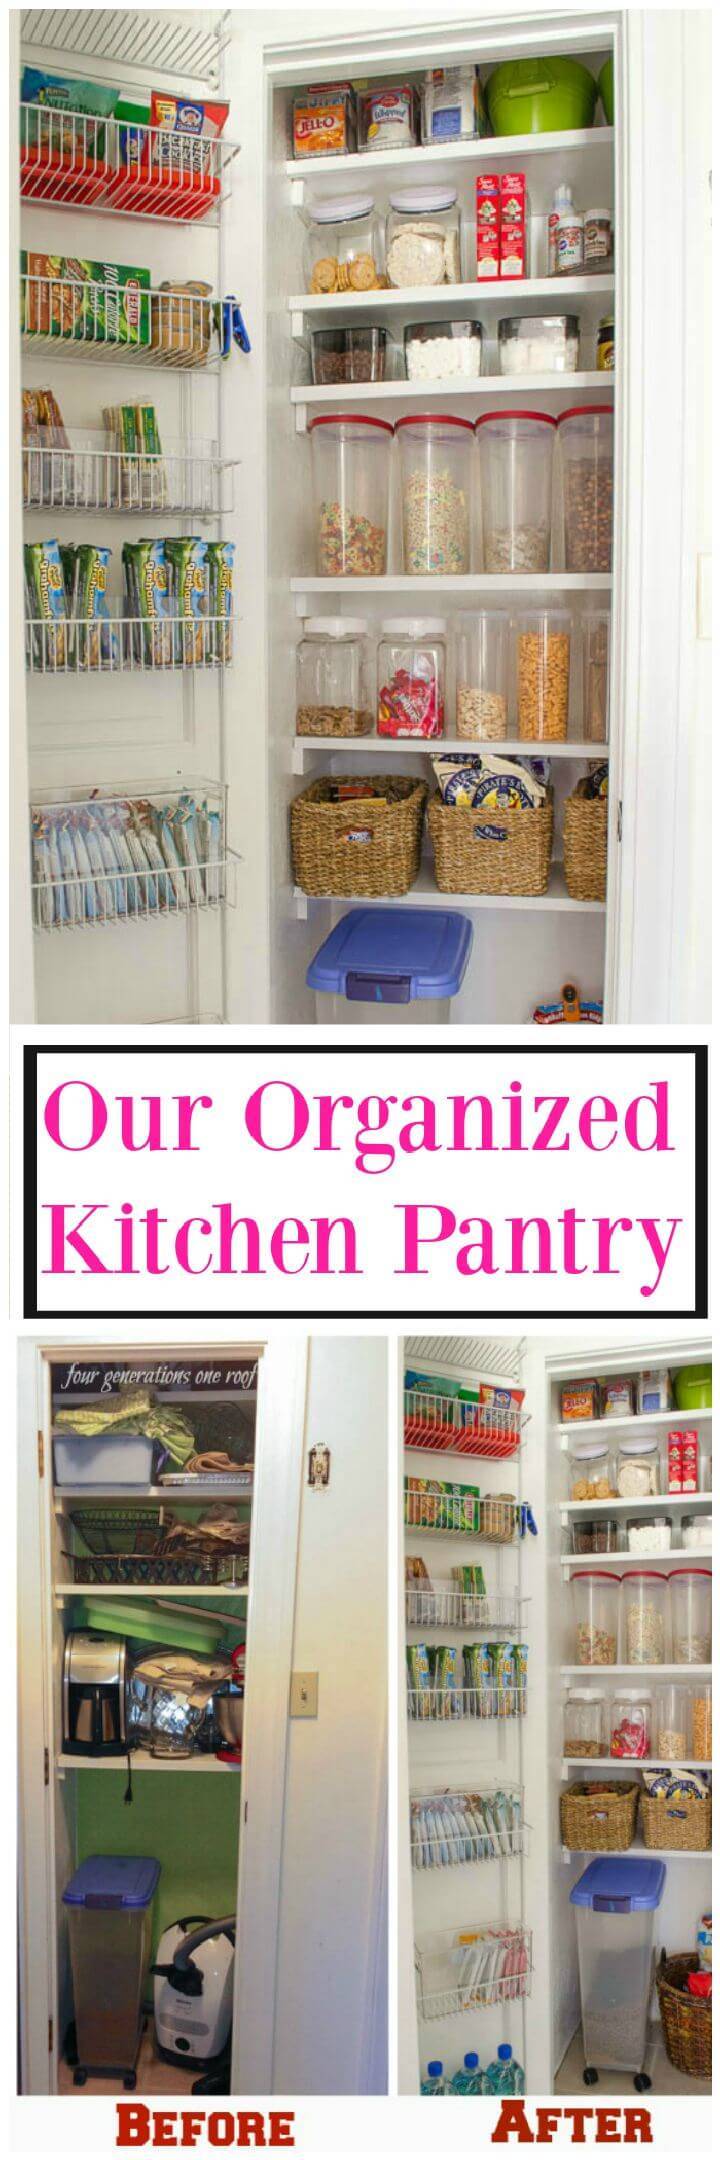 Our Organized Kitchen Pantry